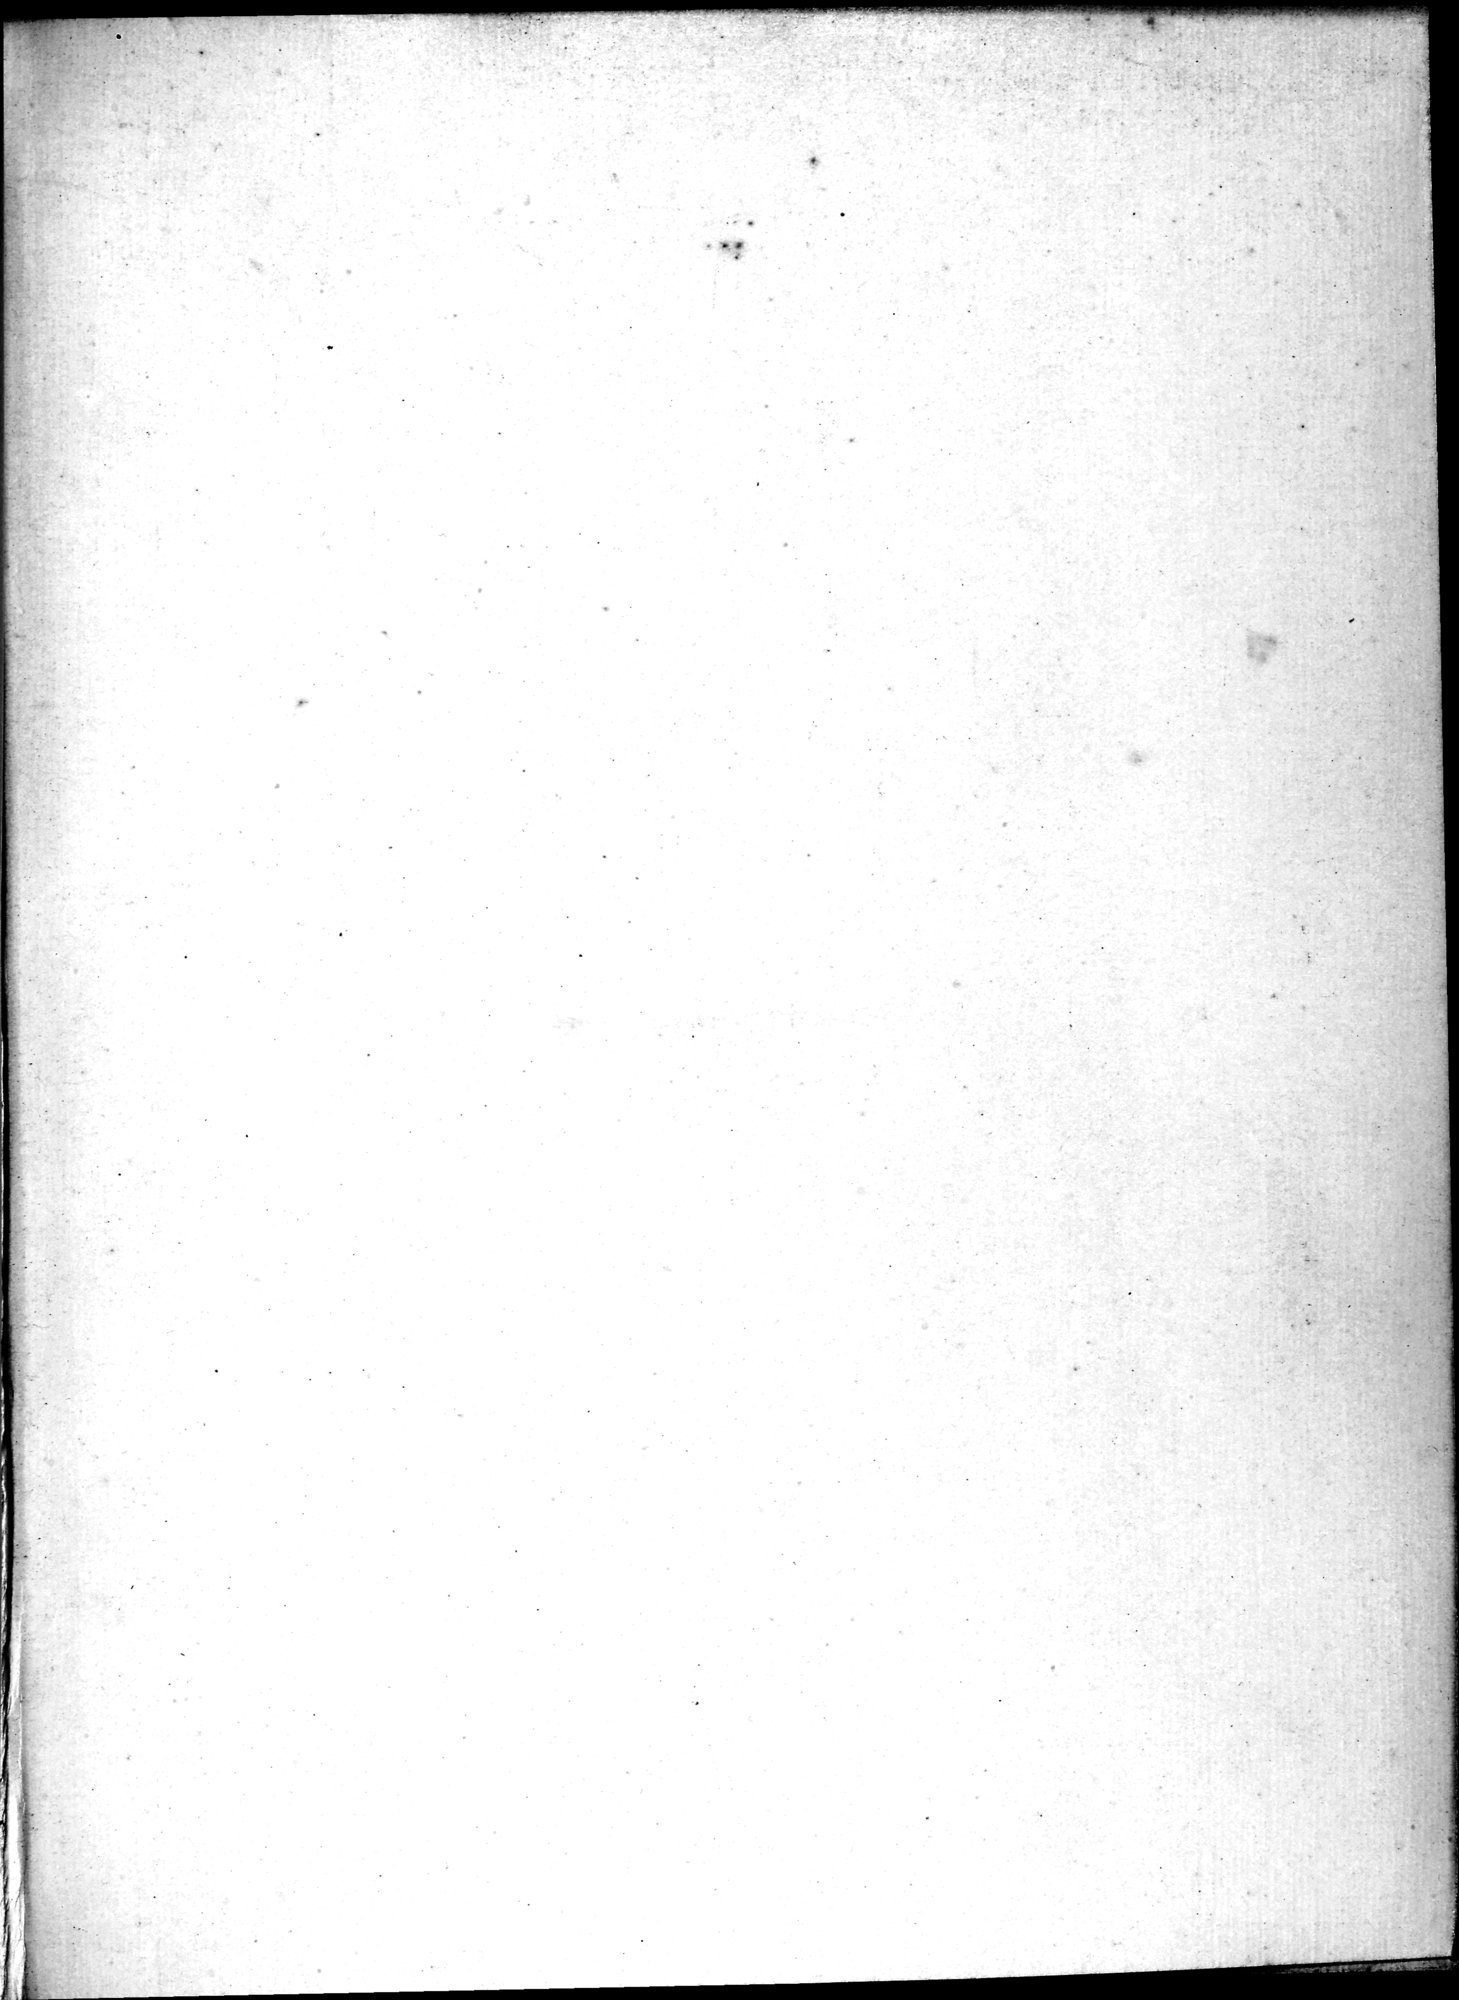 Mongoliia i Kam : vol.2 / Page 579 (Grayscale High Resolution Image)